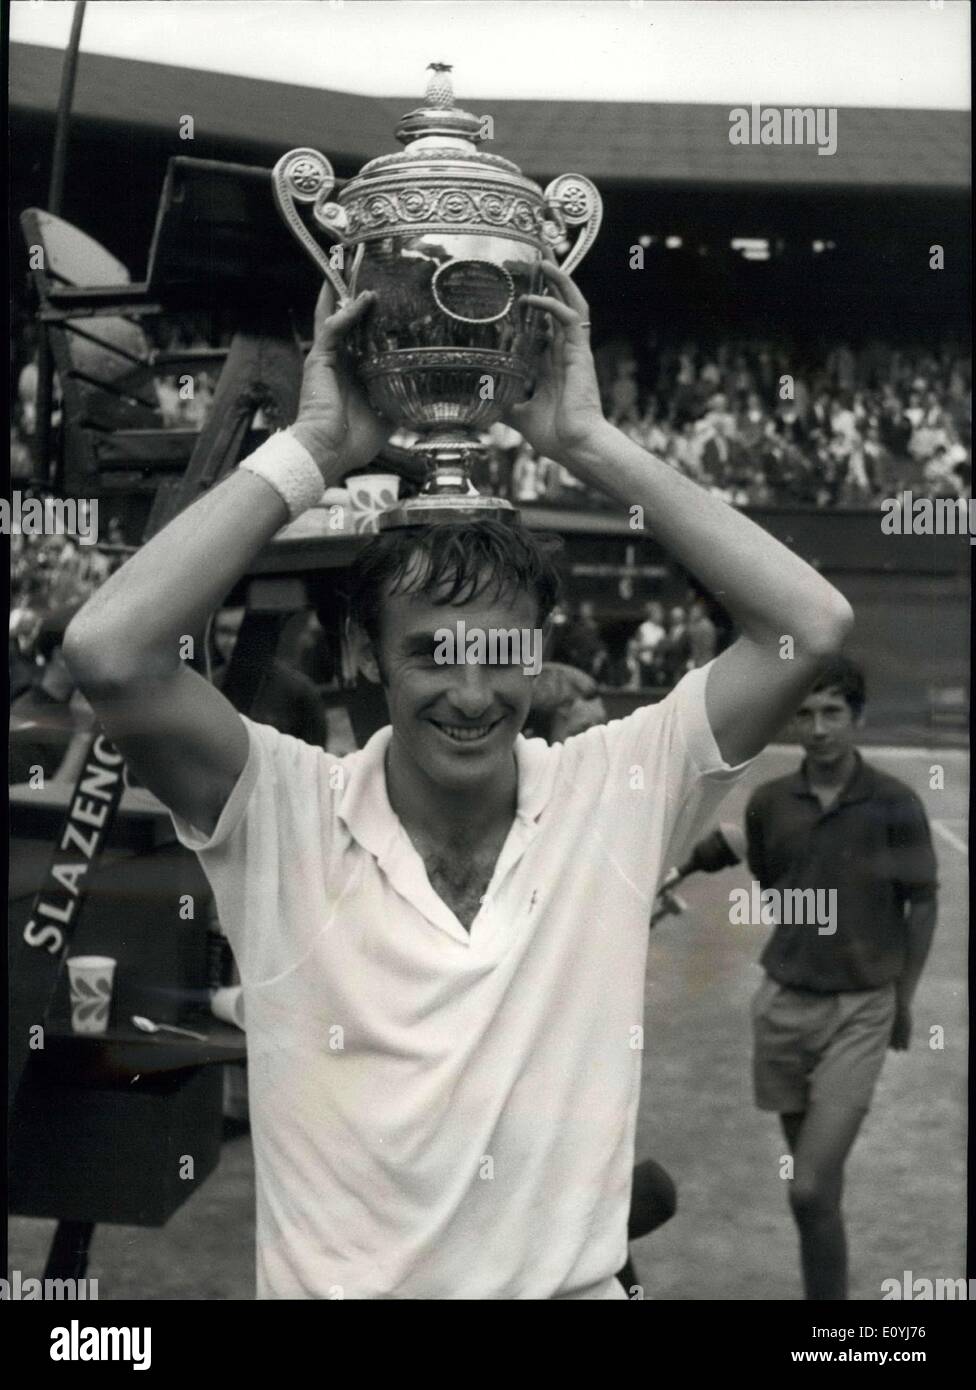 Jul. 04, 1970 - John Newcombe becomes the 1970 Men's Singles Champion at  Wimbledon: John Newcombe(Australia) became the Men's Singles champion when  he defeated fellow Australian Ken Rosewall in the final at